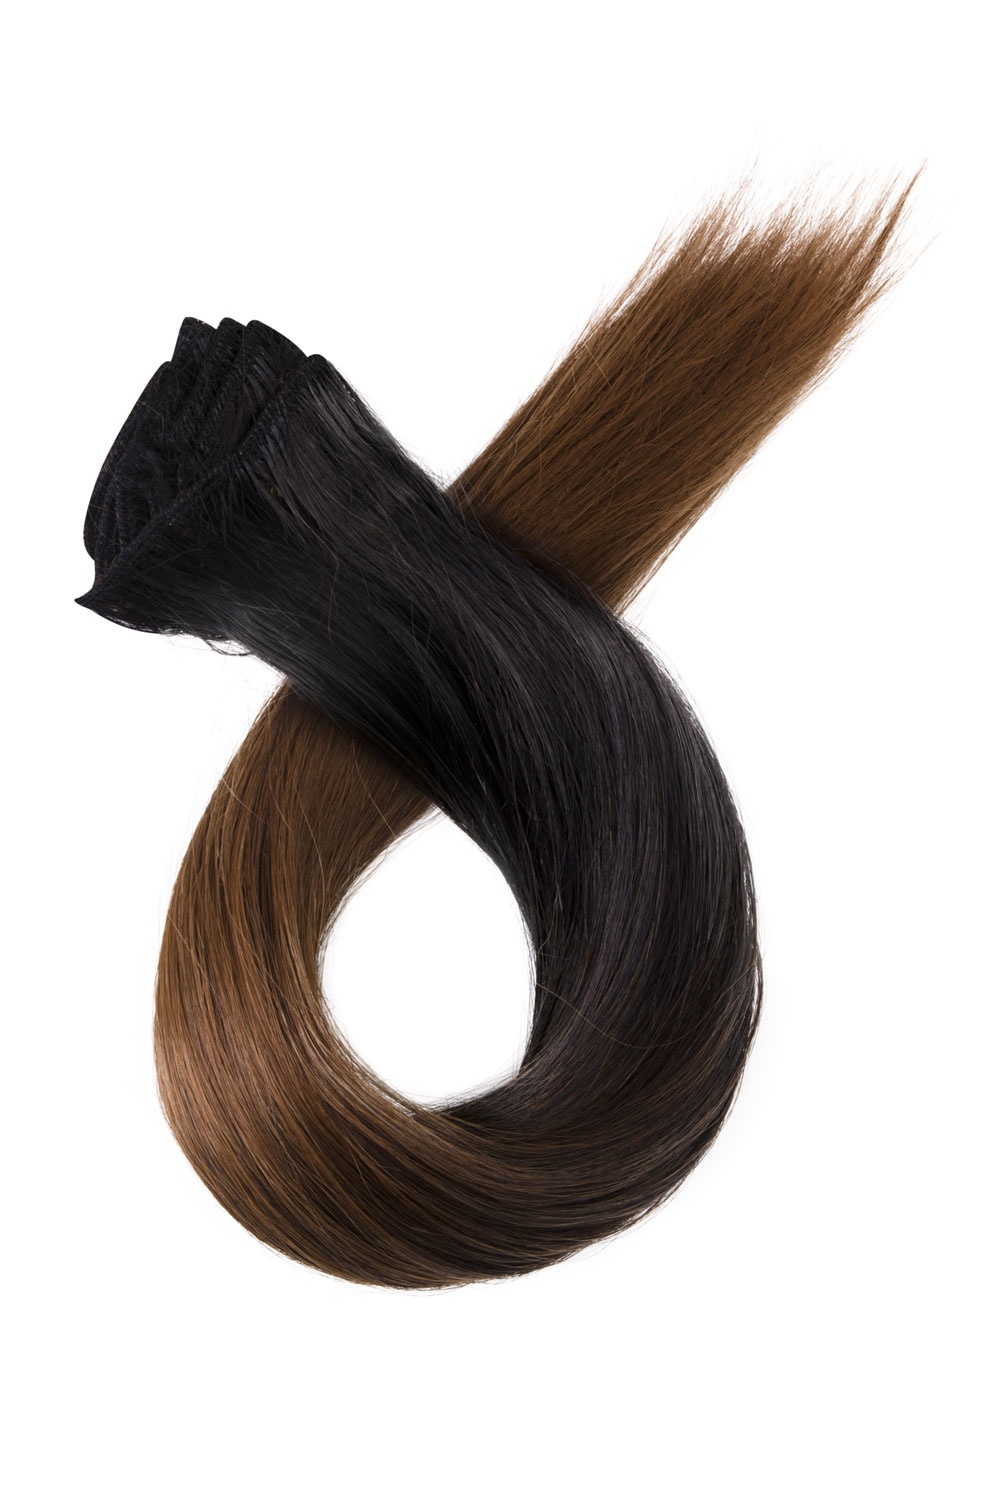 Ombré clip in vlasy, 50cm, 115g, farba M1/27/30